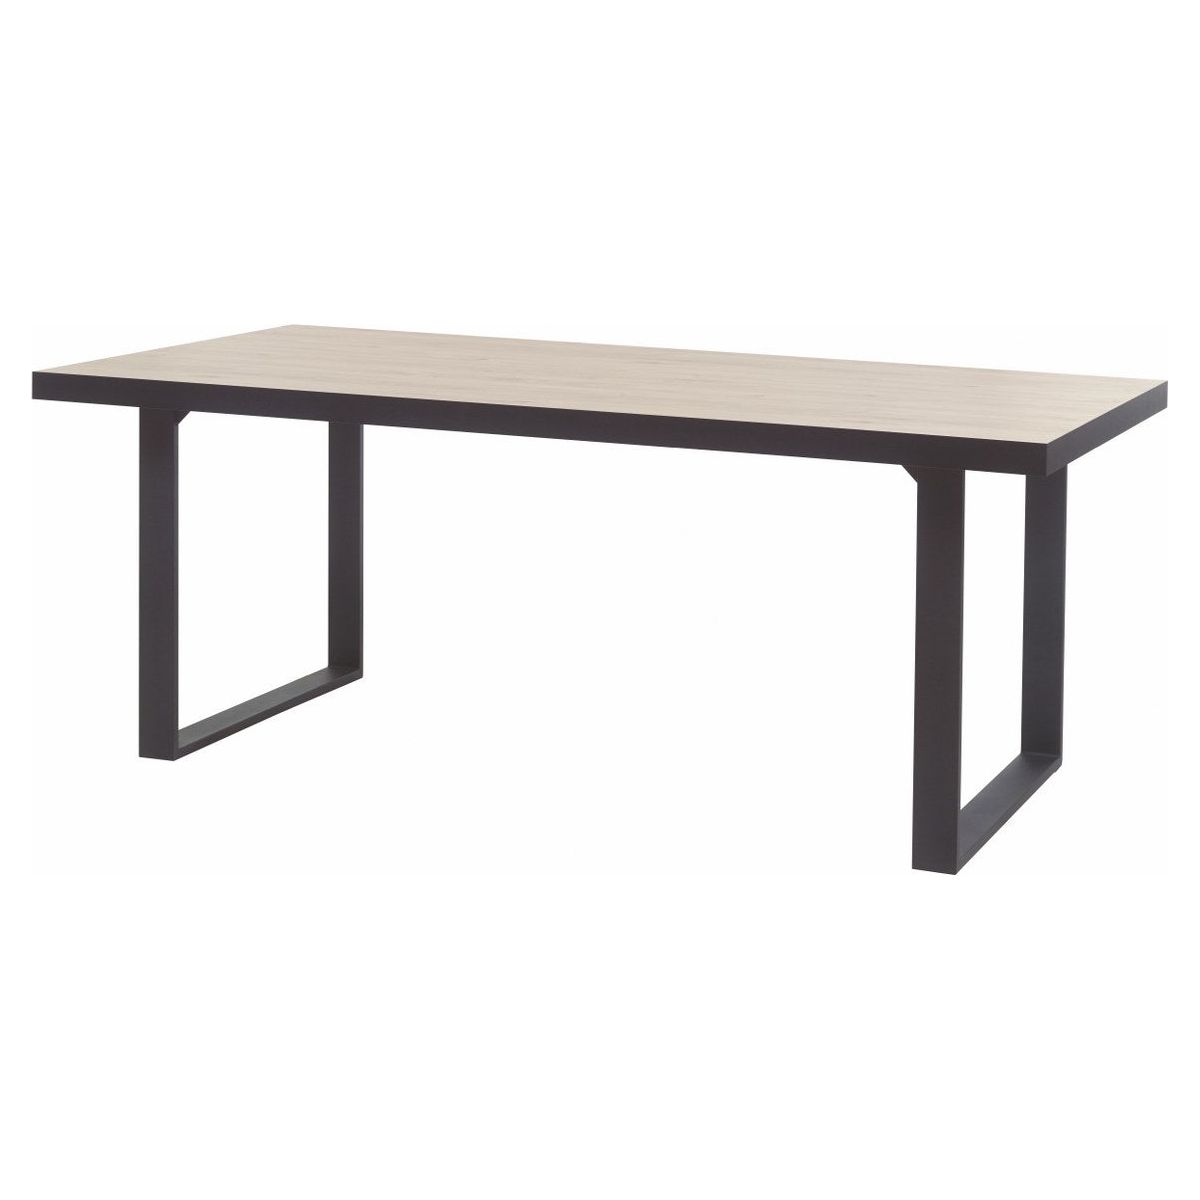 Table | Furniture series Dylan | natural, black